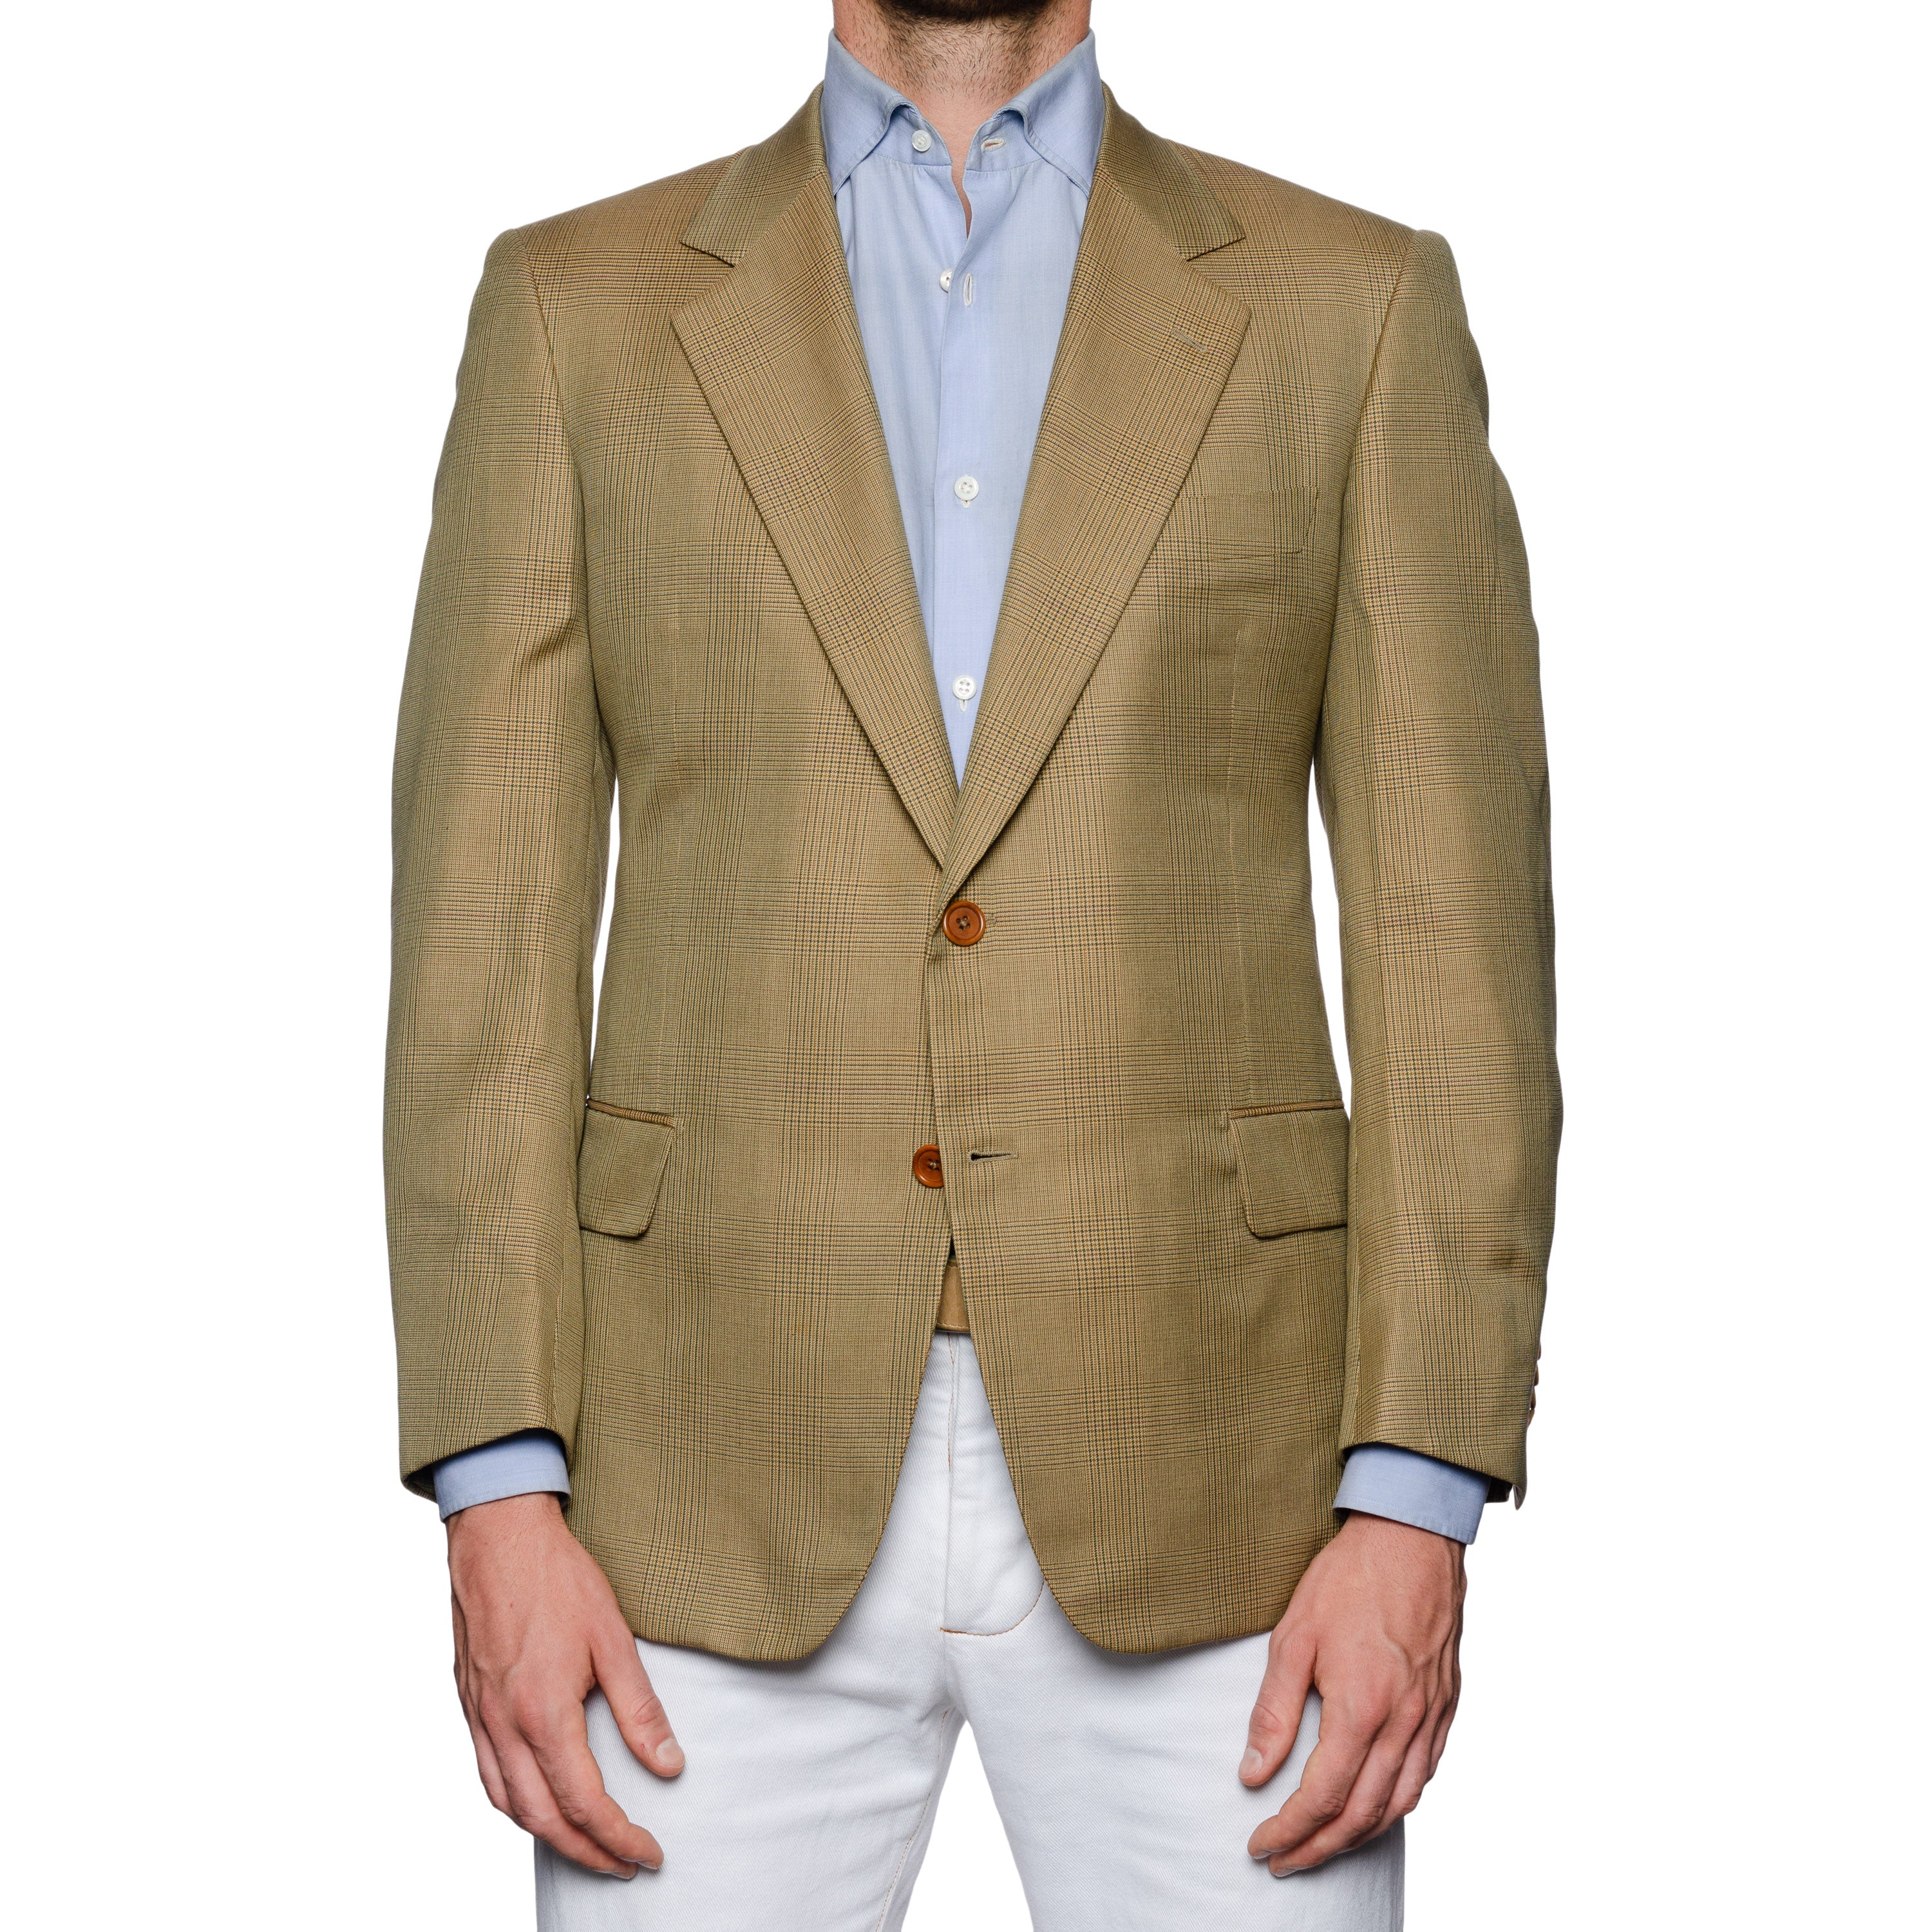 CASTANGIA 1850 Tan Prince of Wales Cotton Sport Coat Jacket EU 50 NEW US 40 CASTANGIA